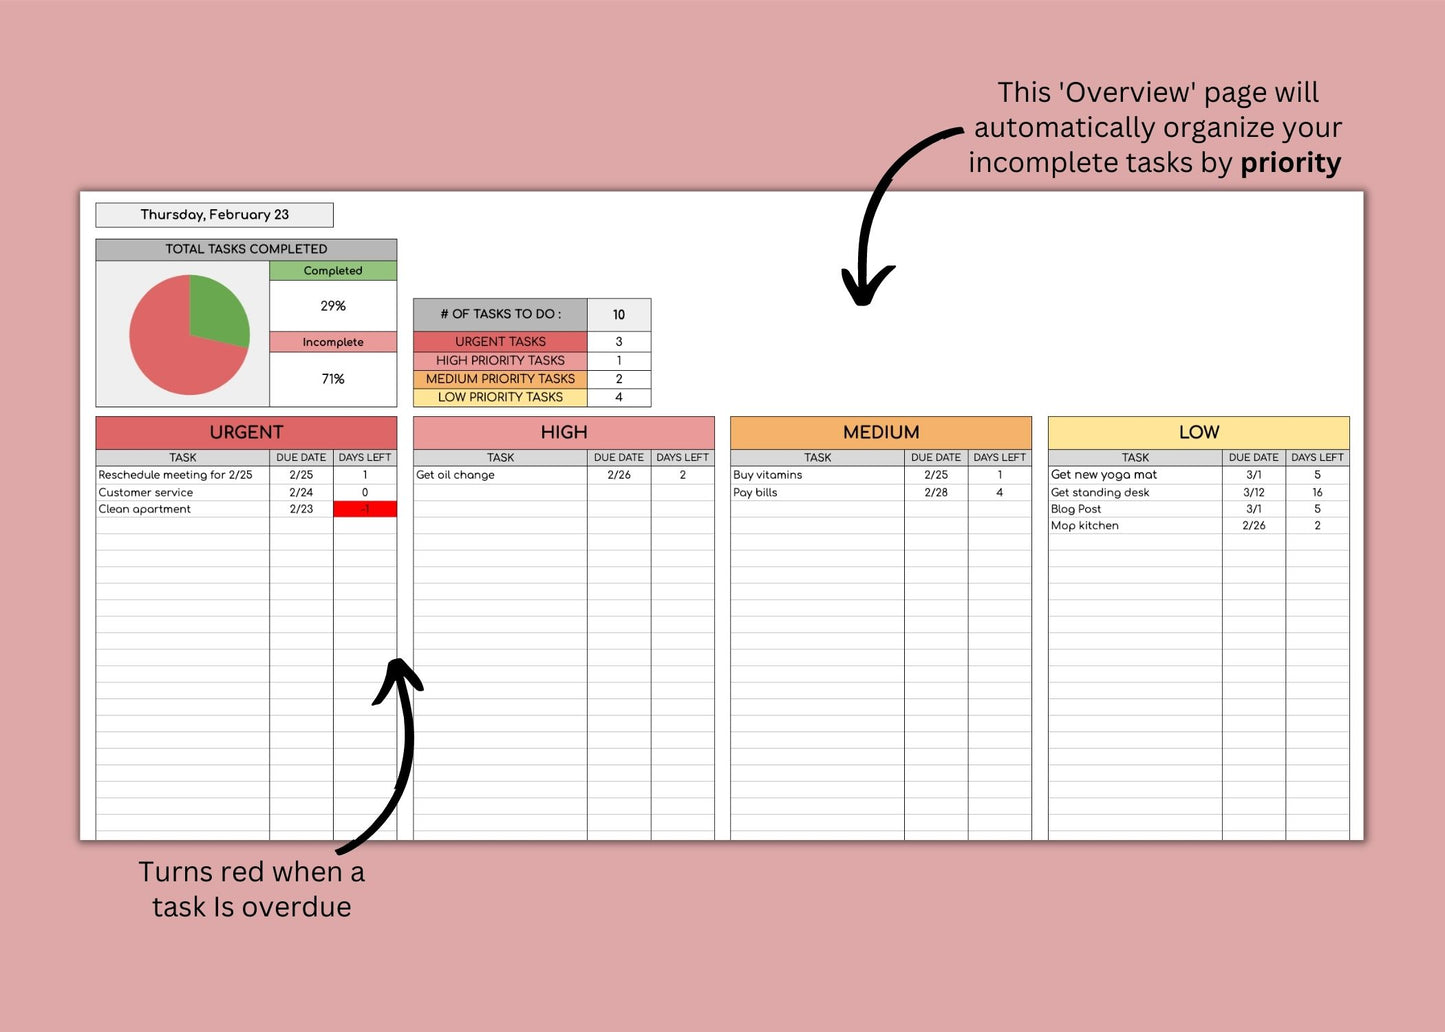 Task Tracker | Google Sheets Template